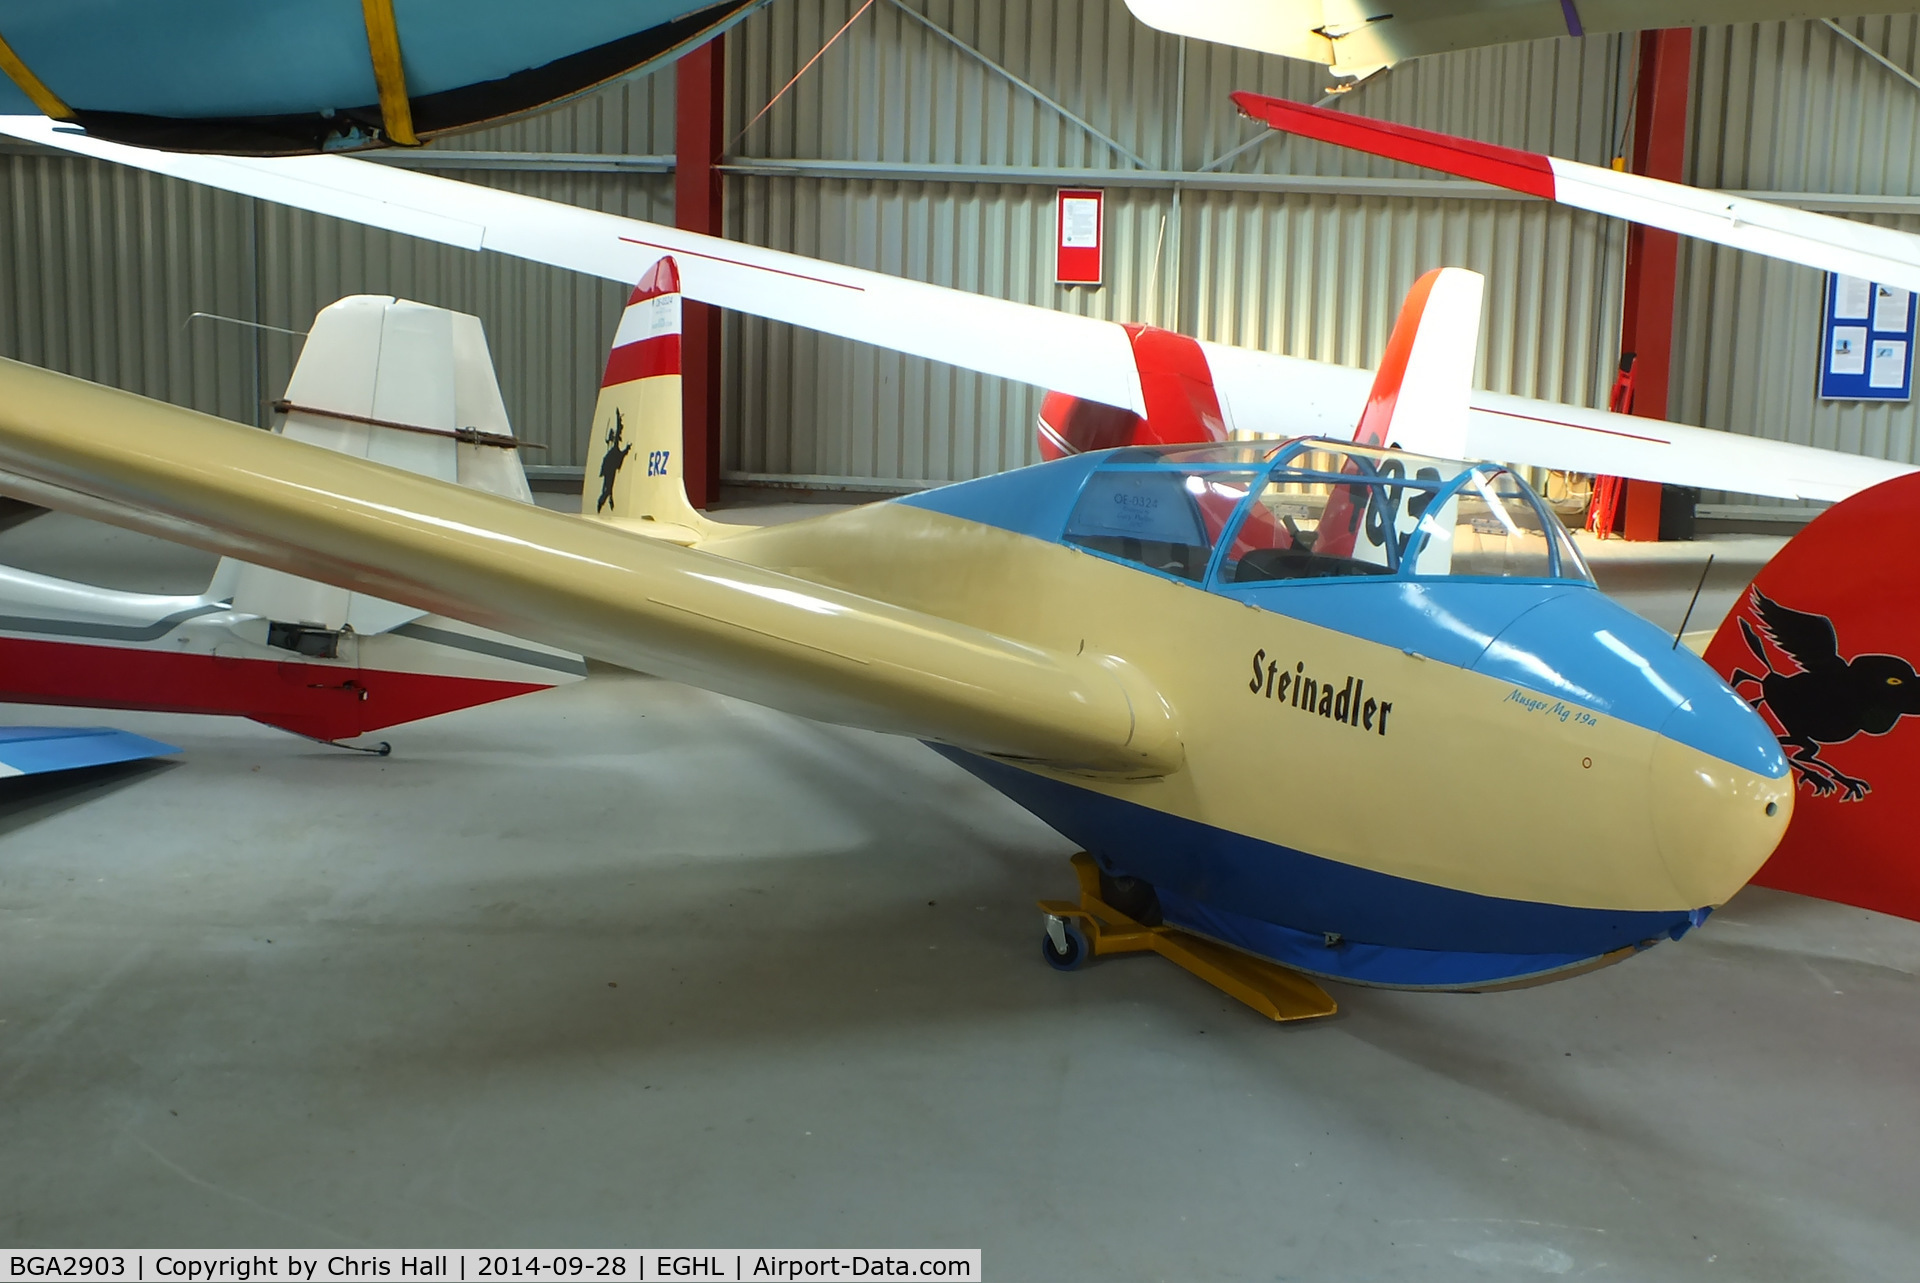 BGA2903, Oberlerchner Mg-19A Steinadler C/N 15, Gliding Heritage Centre, Lasham